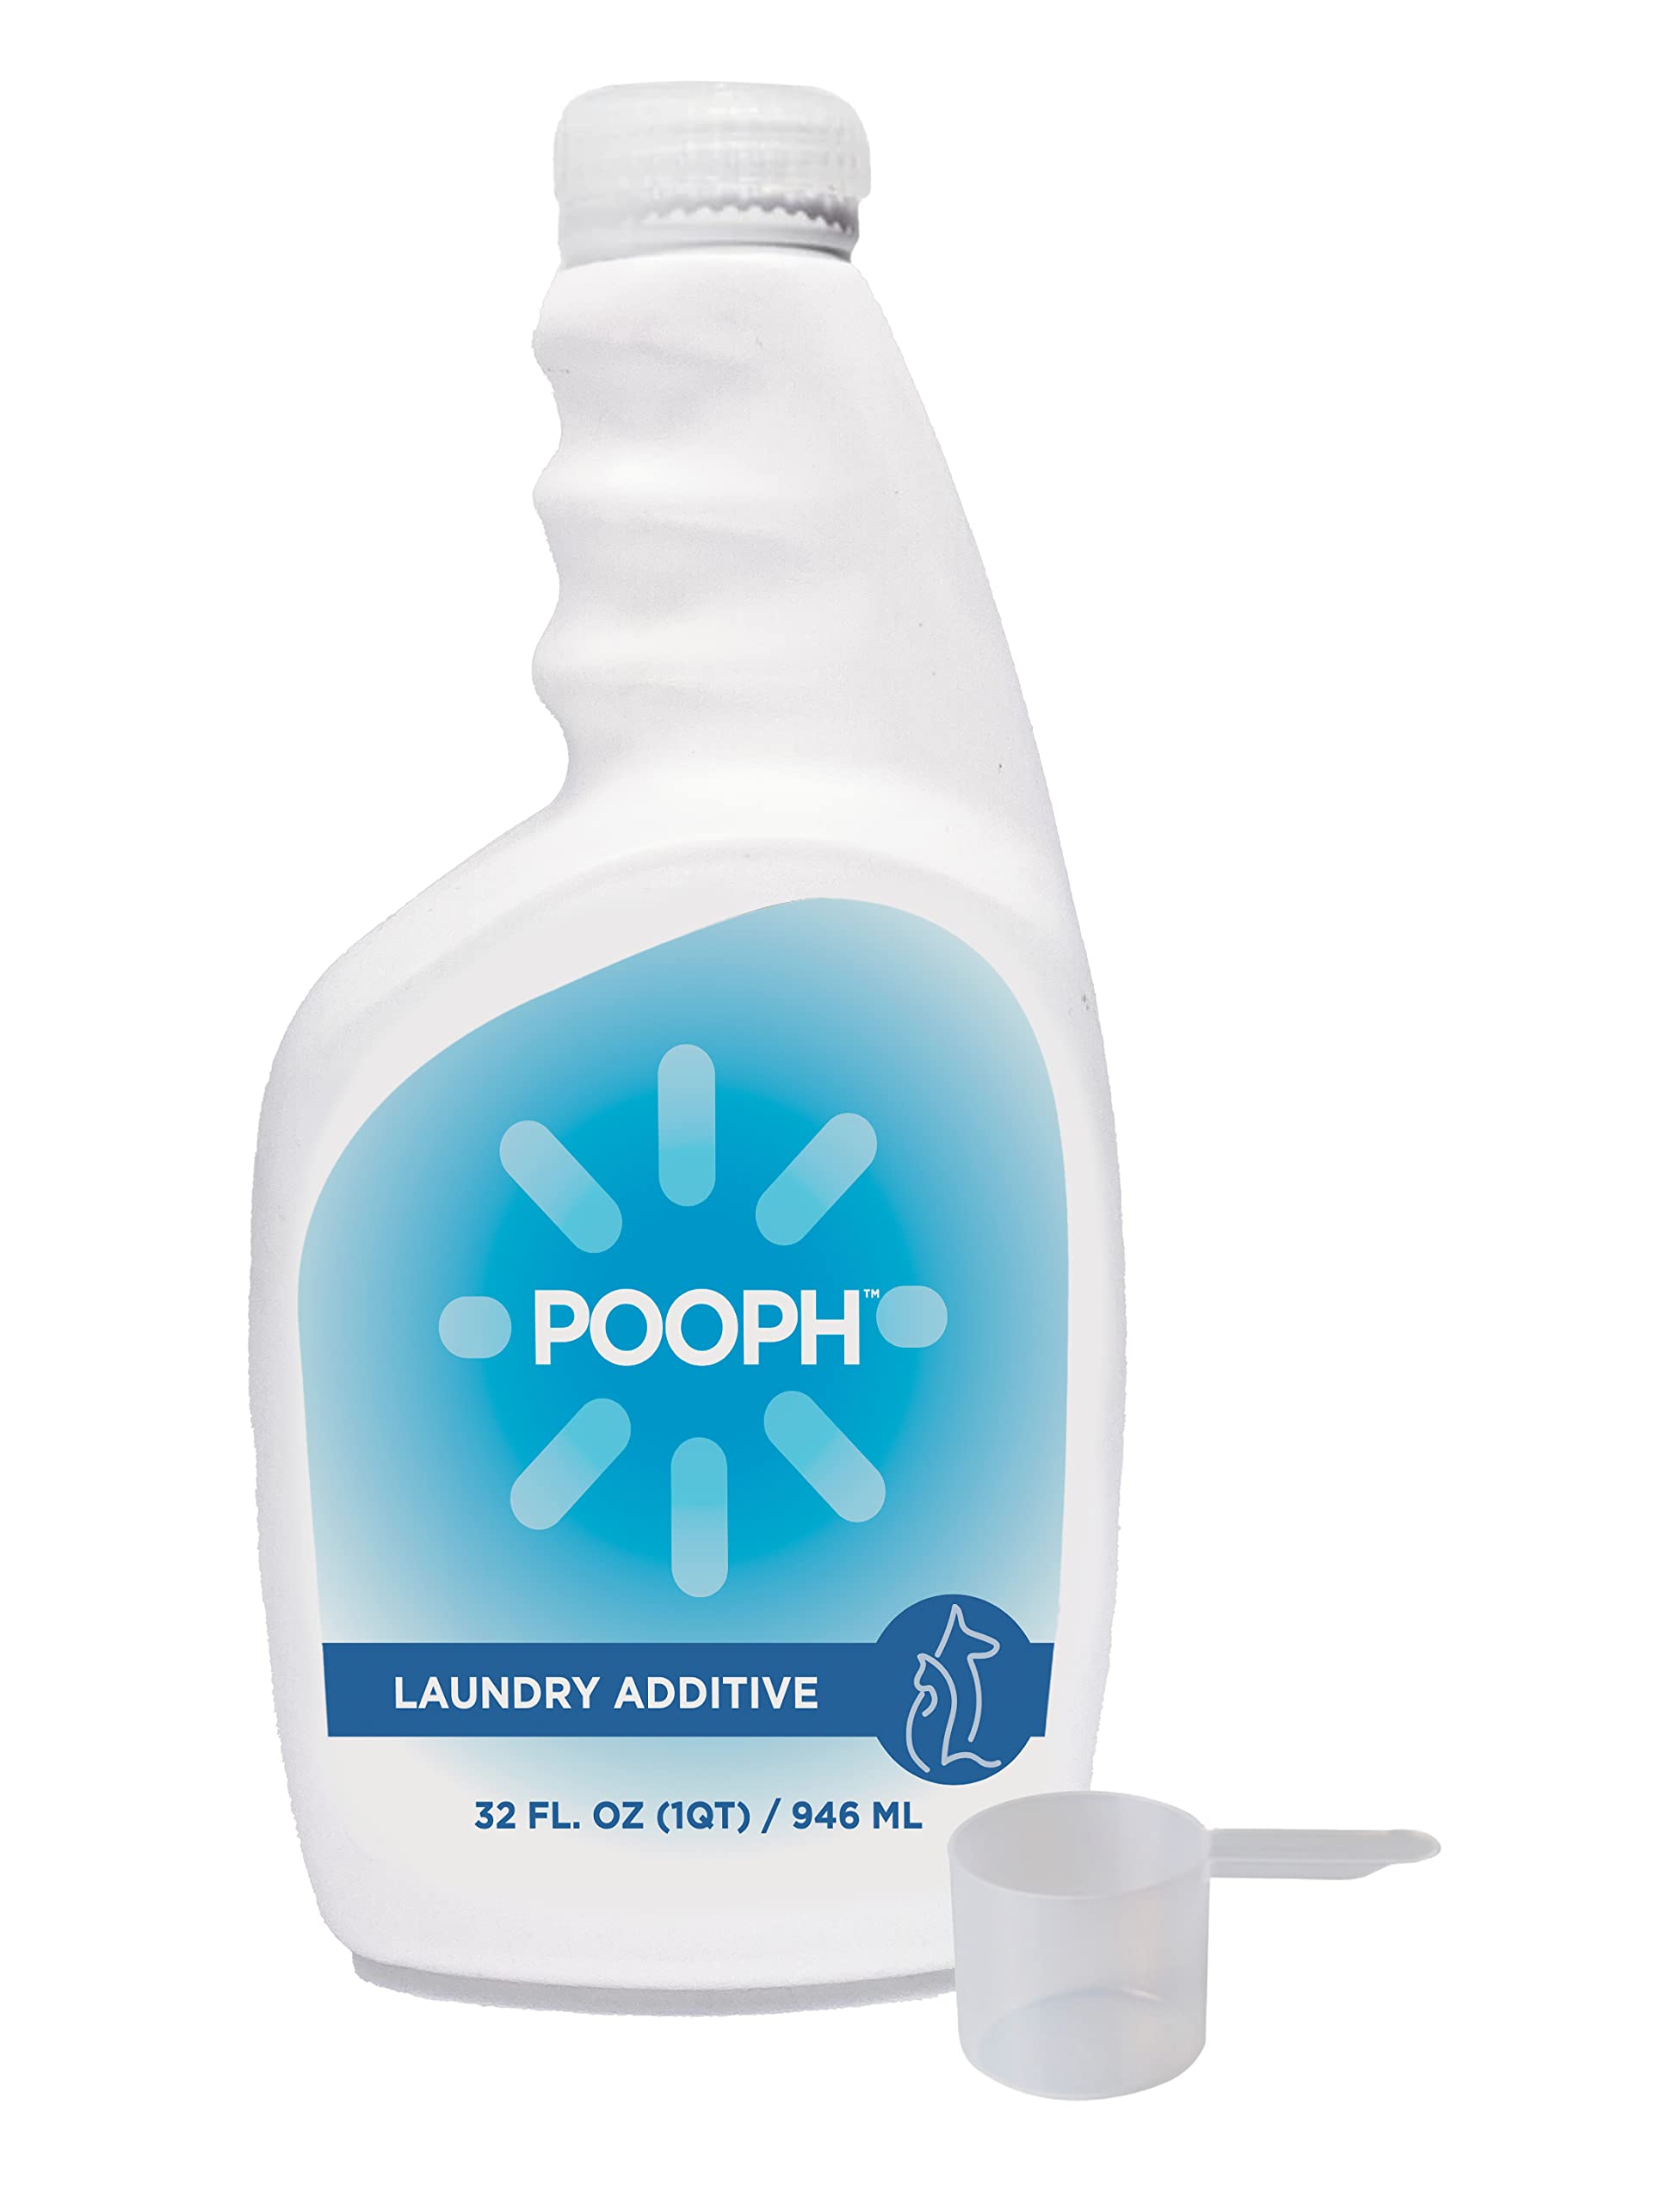 Pooph Laundry Additive, 32oz Bottle (16 Loads) - Dismantles Odors